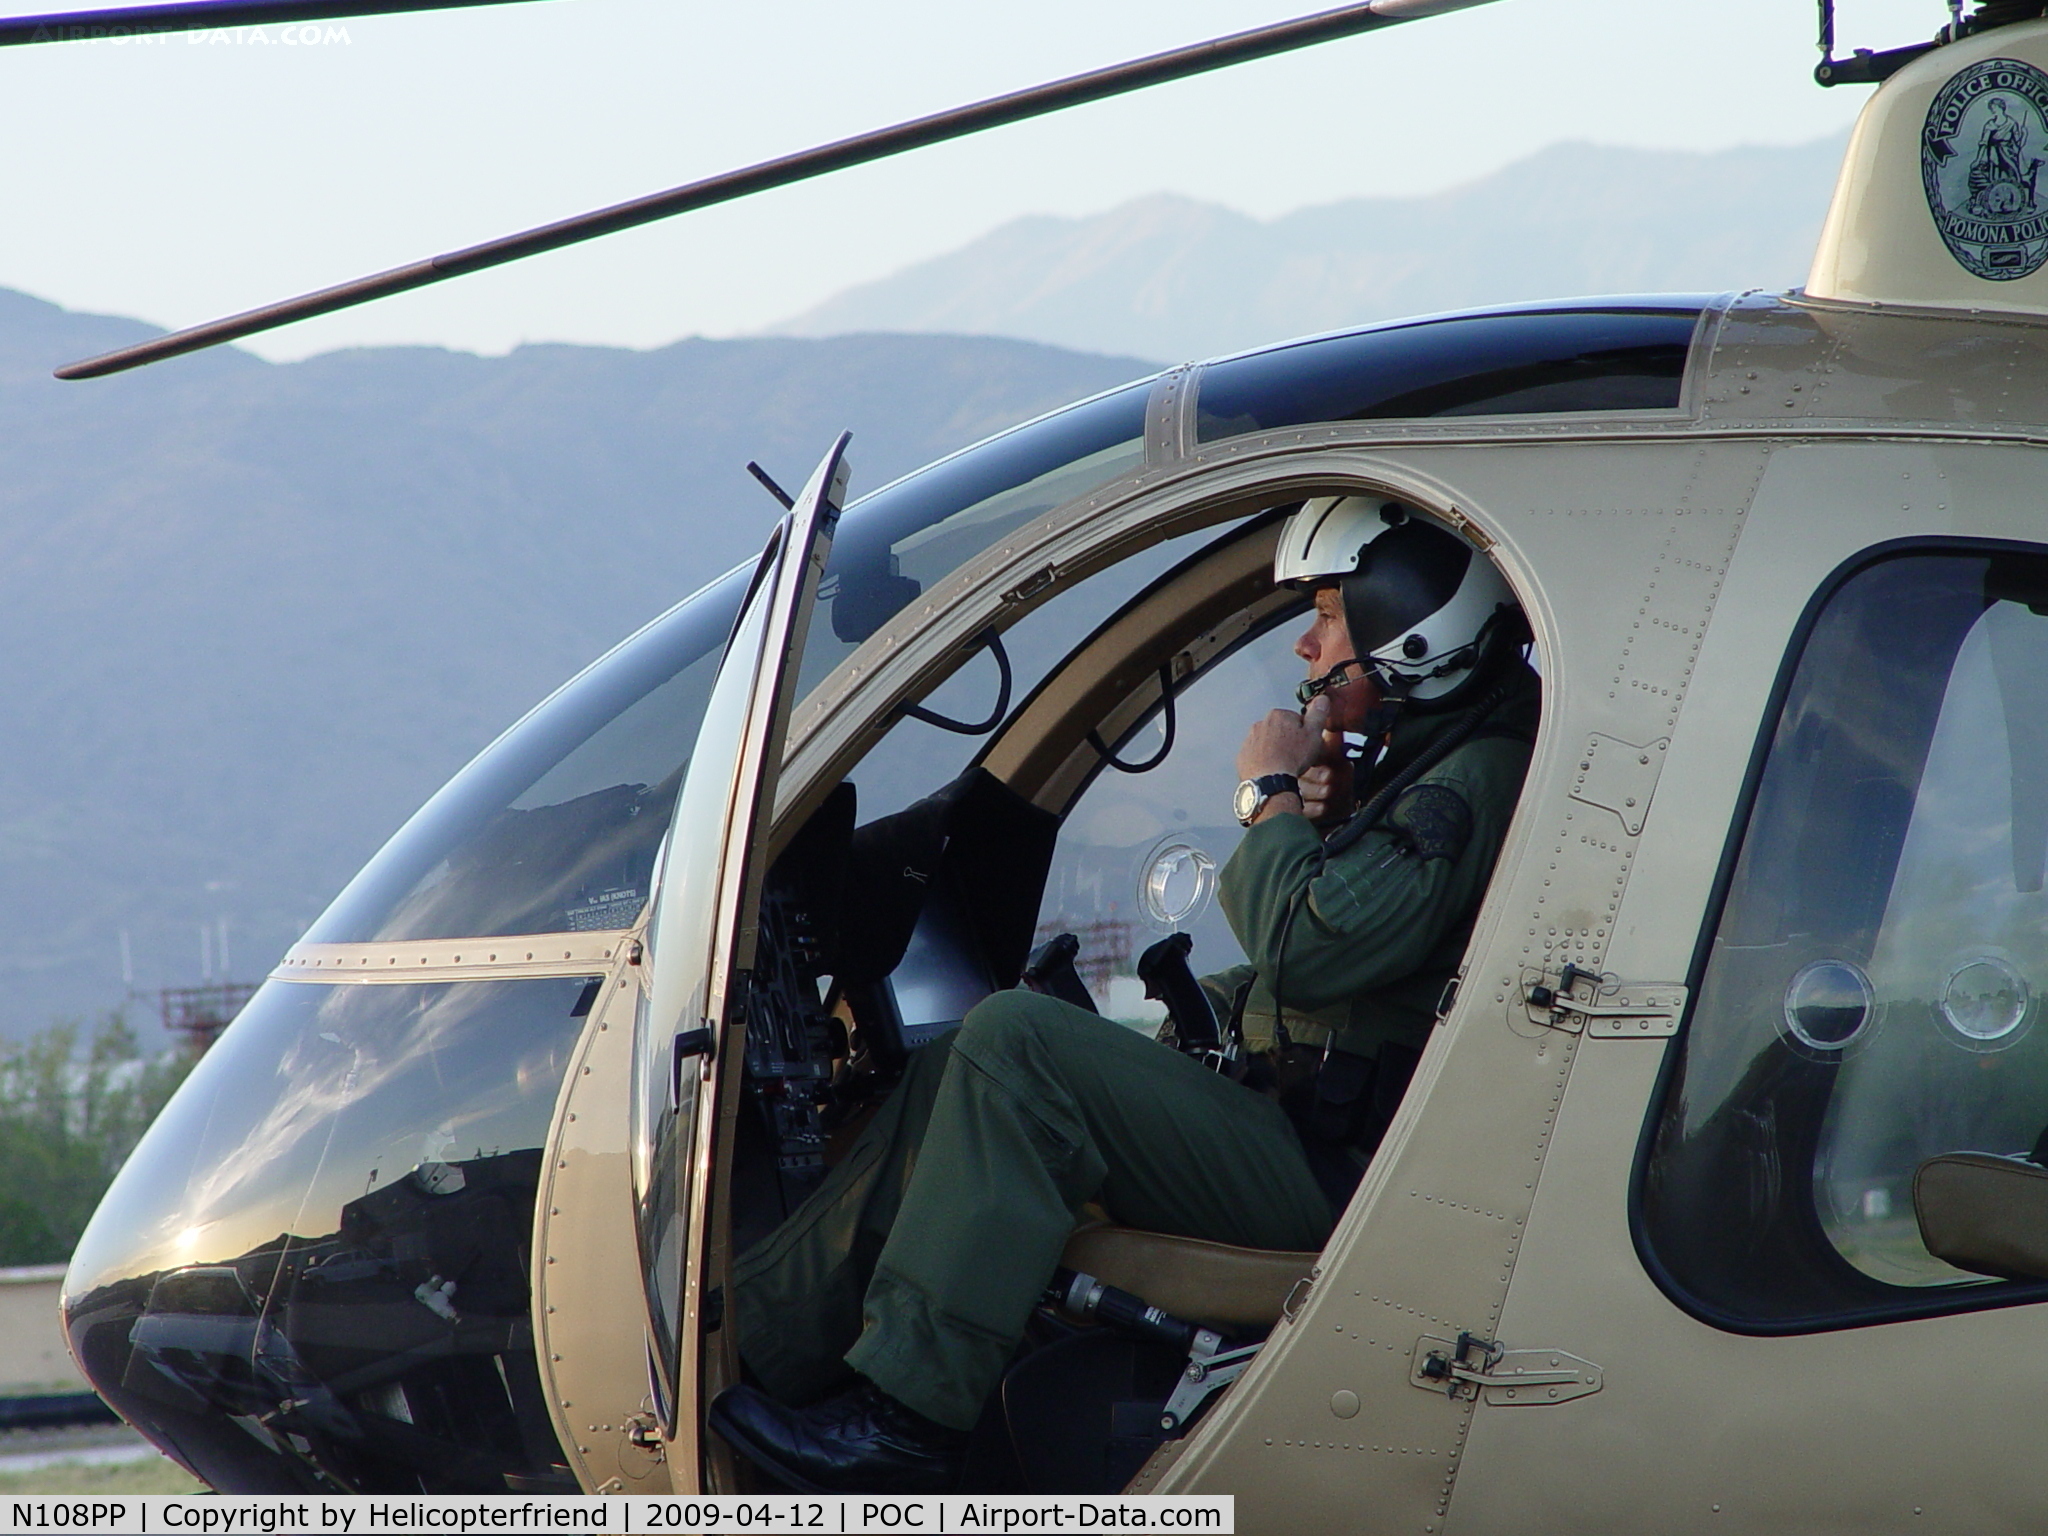 N108PP, 2008 MD Helicopters 369E C/N 0578E, Senior Pilot Bass preparing for patrol